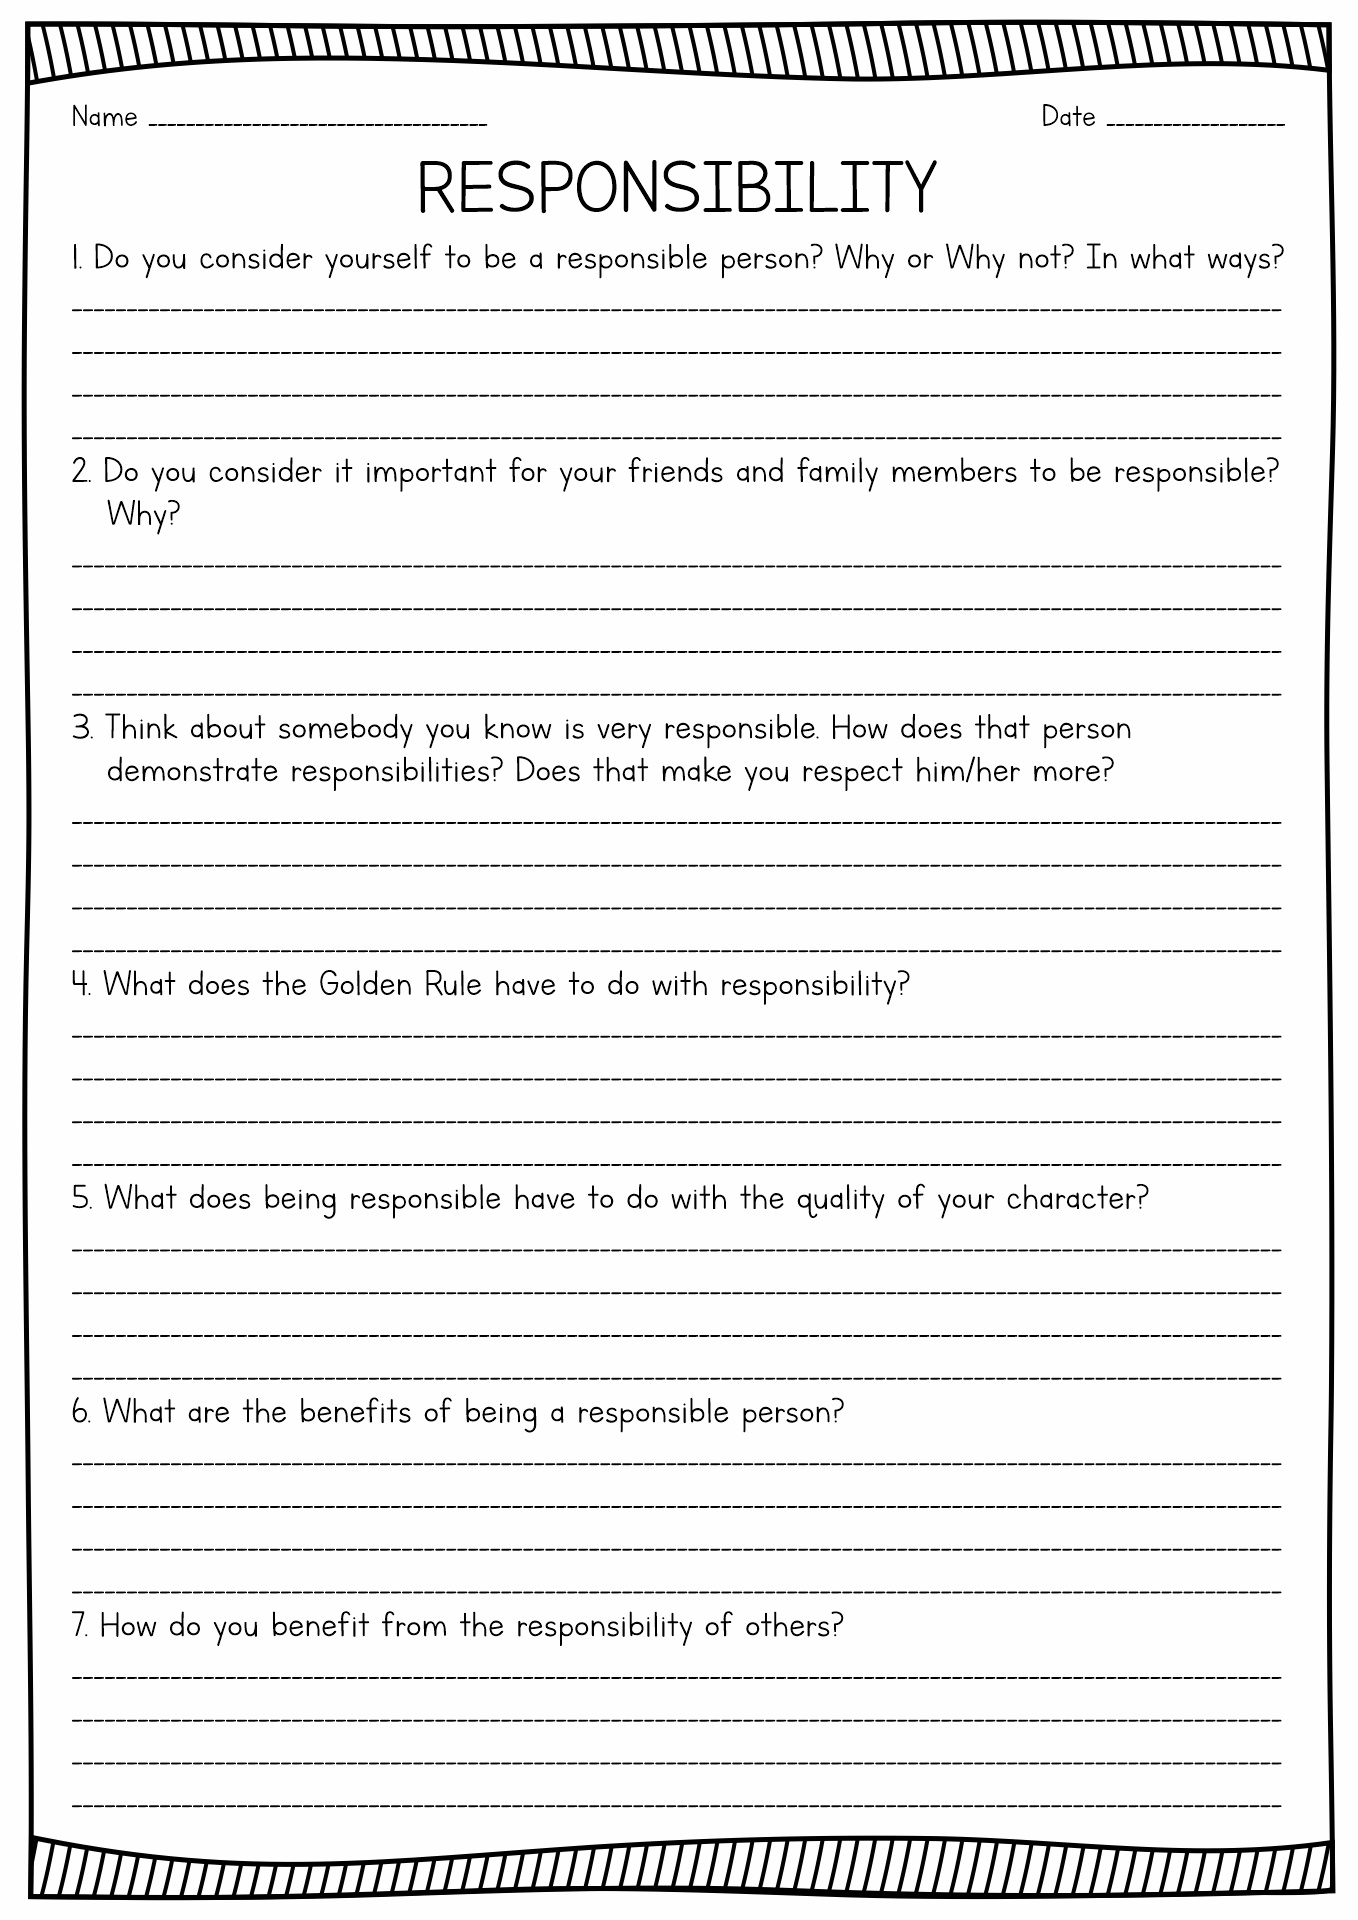 Personal Responsibility Worksheet Image